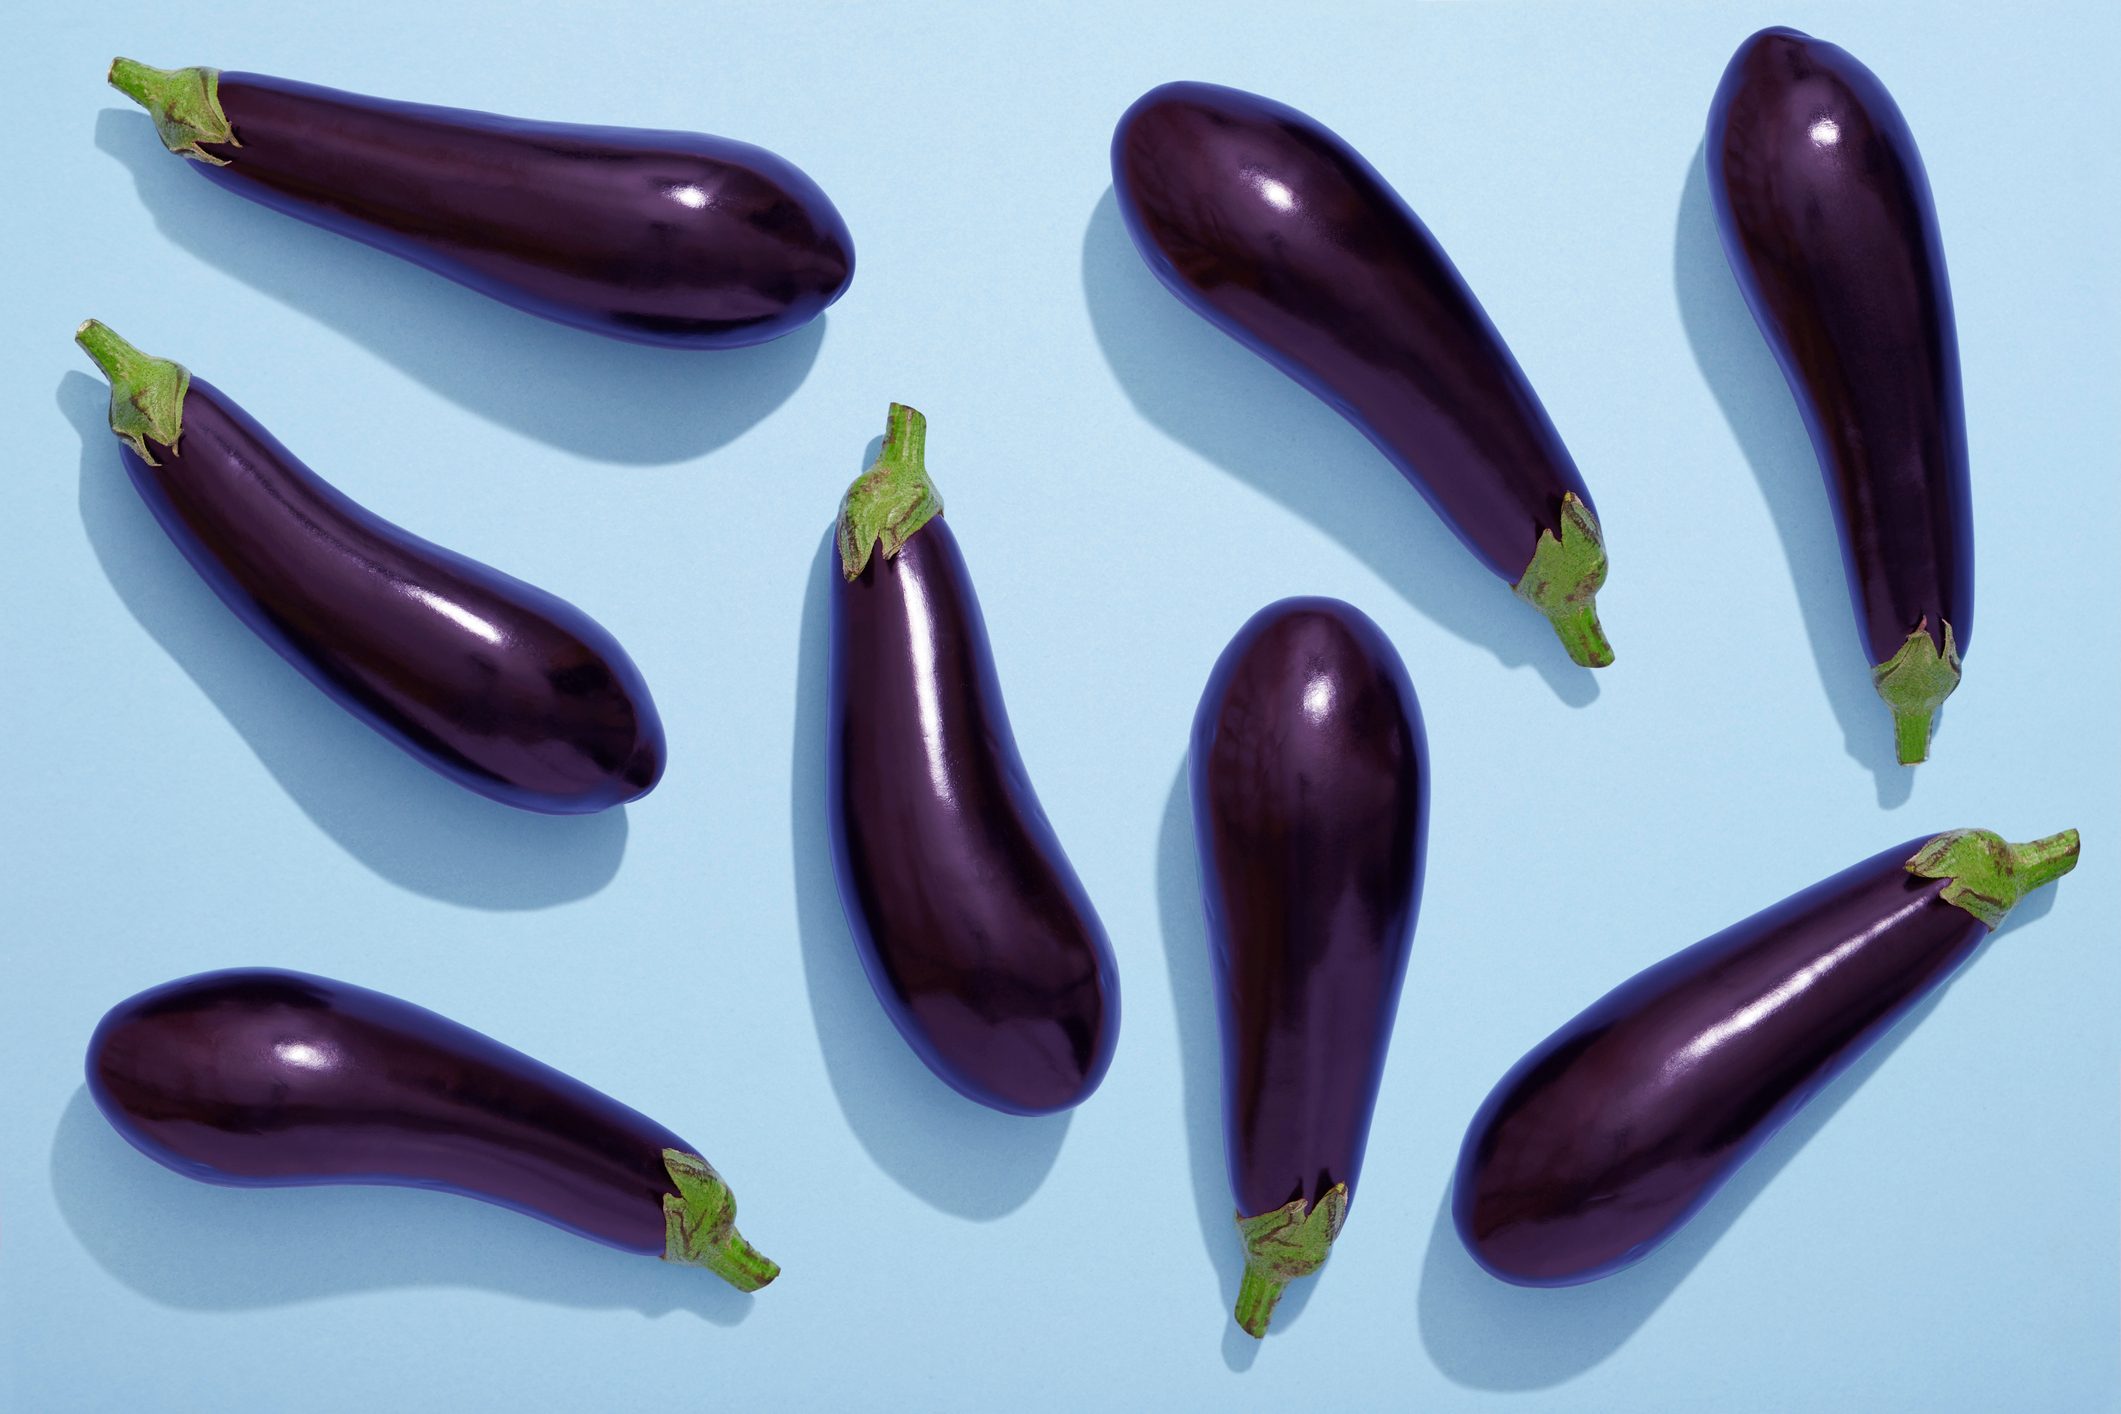 Image of Eggplant vegetable